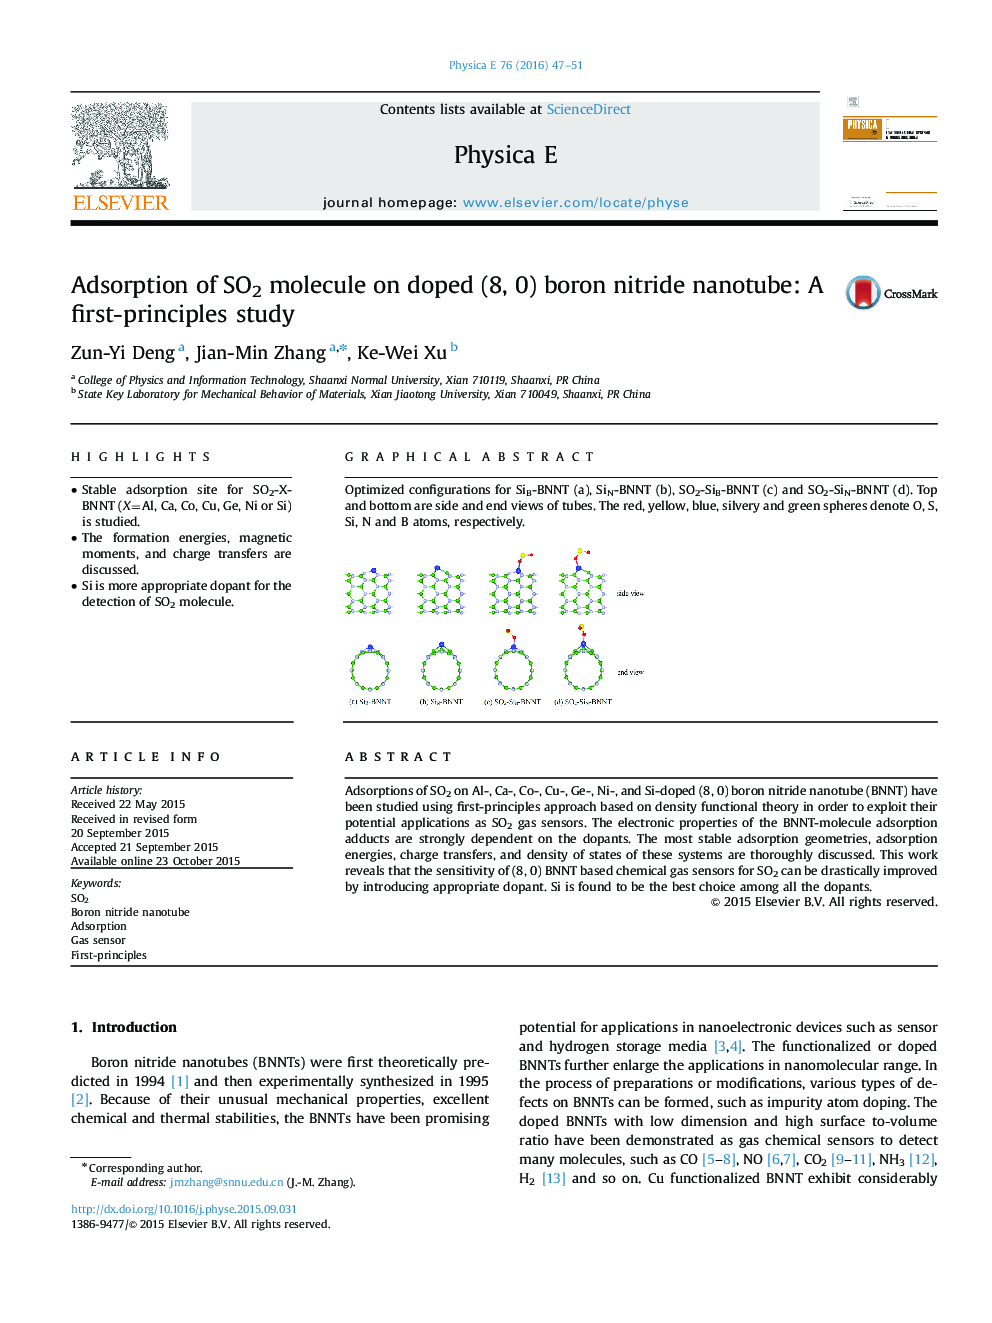 Adsorption of SO2 molecule on doped (8, 0) boron nitride nanotube: A first-principles study